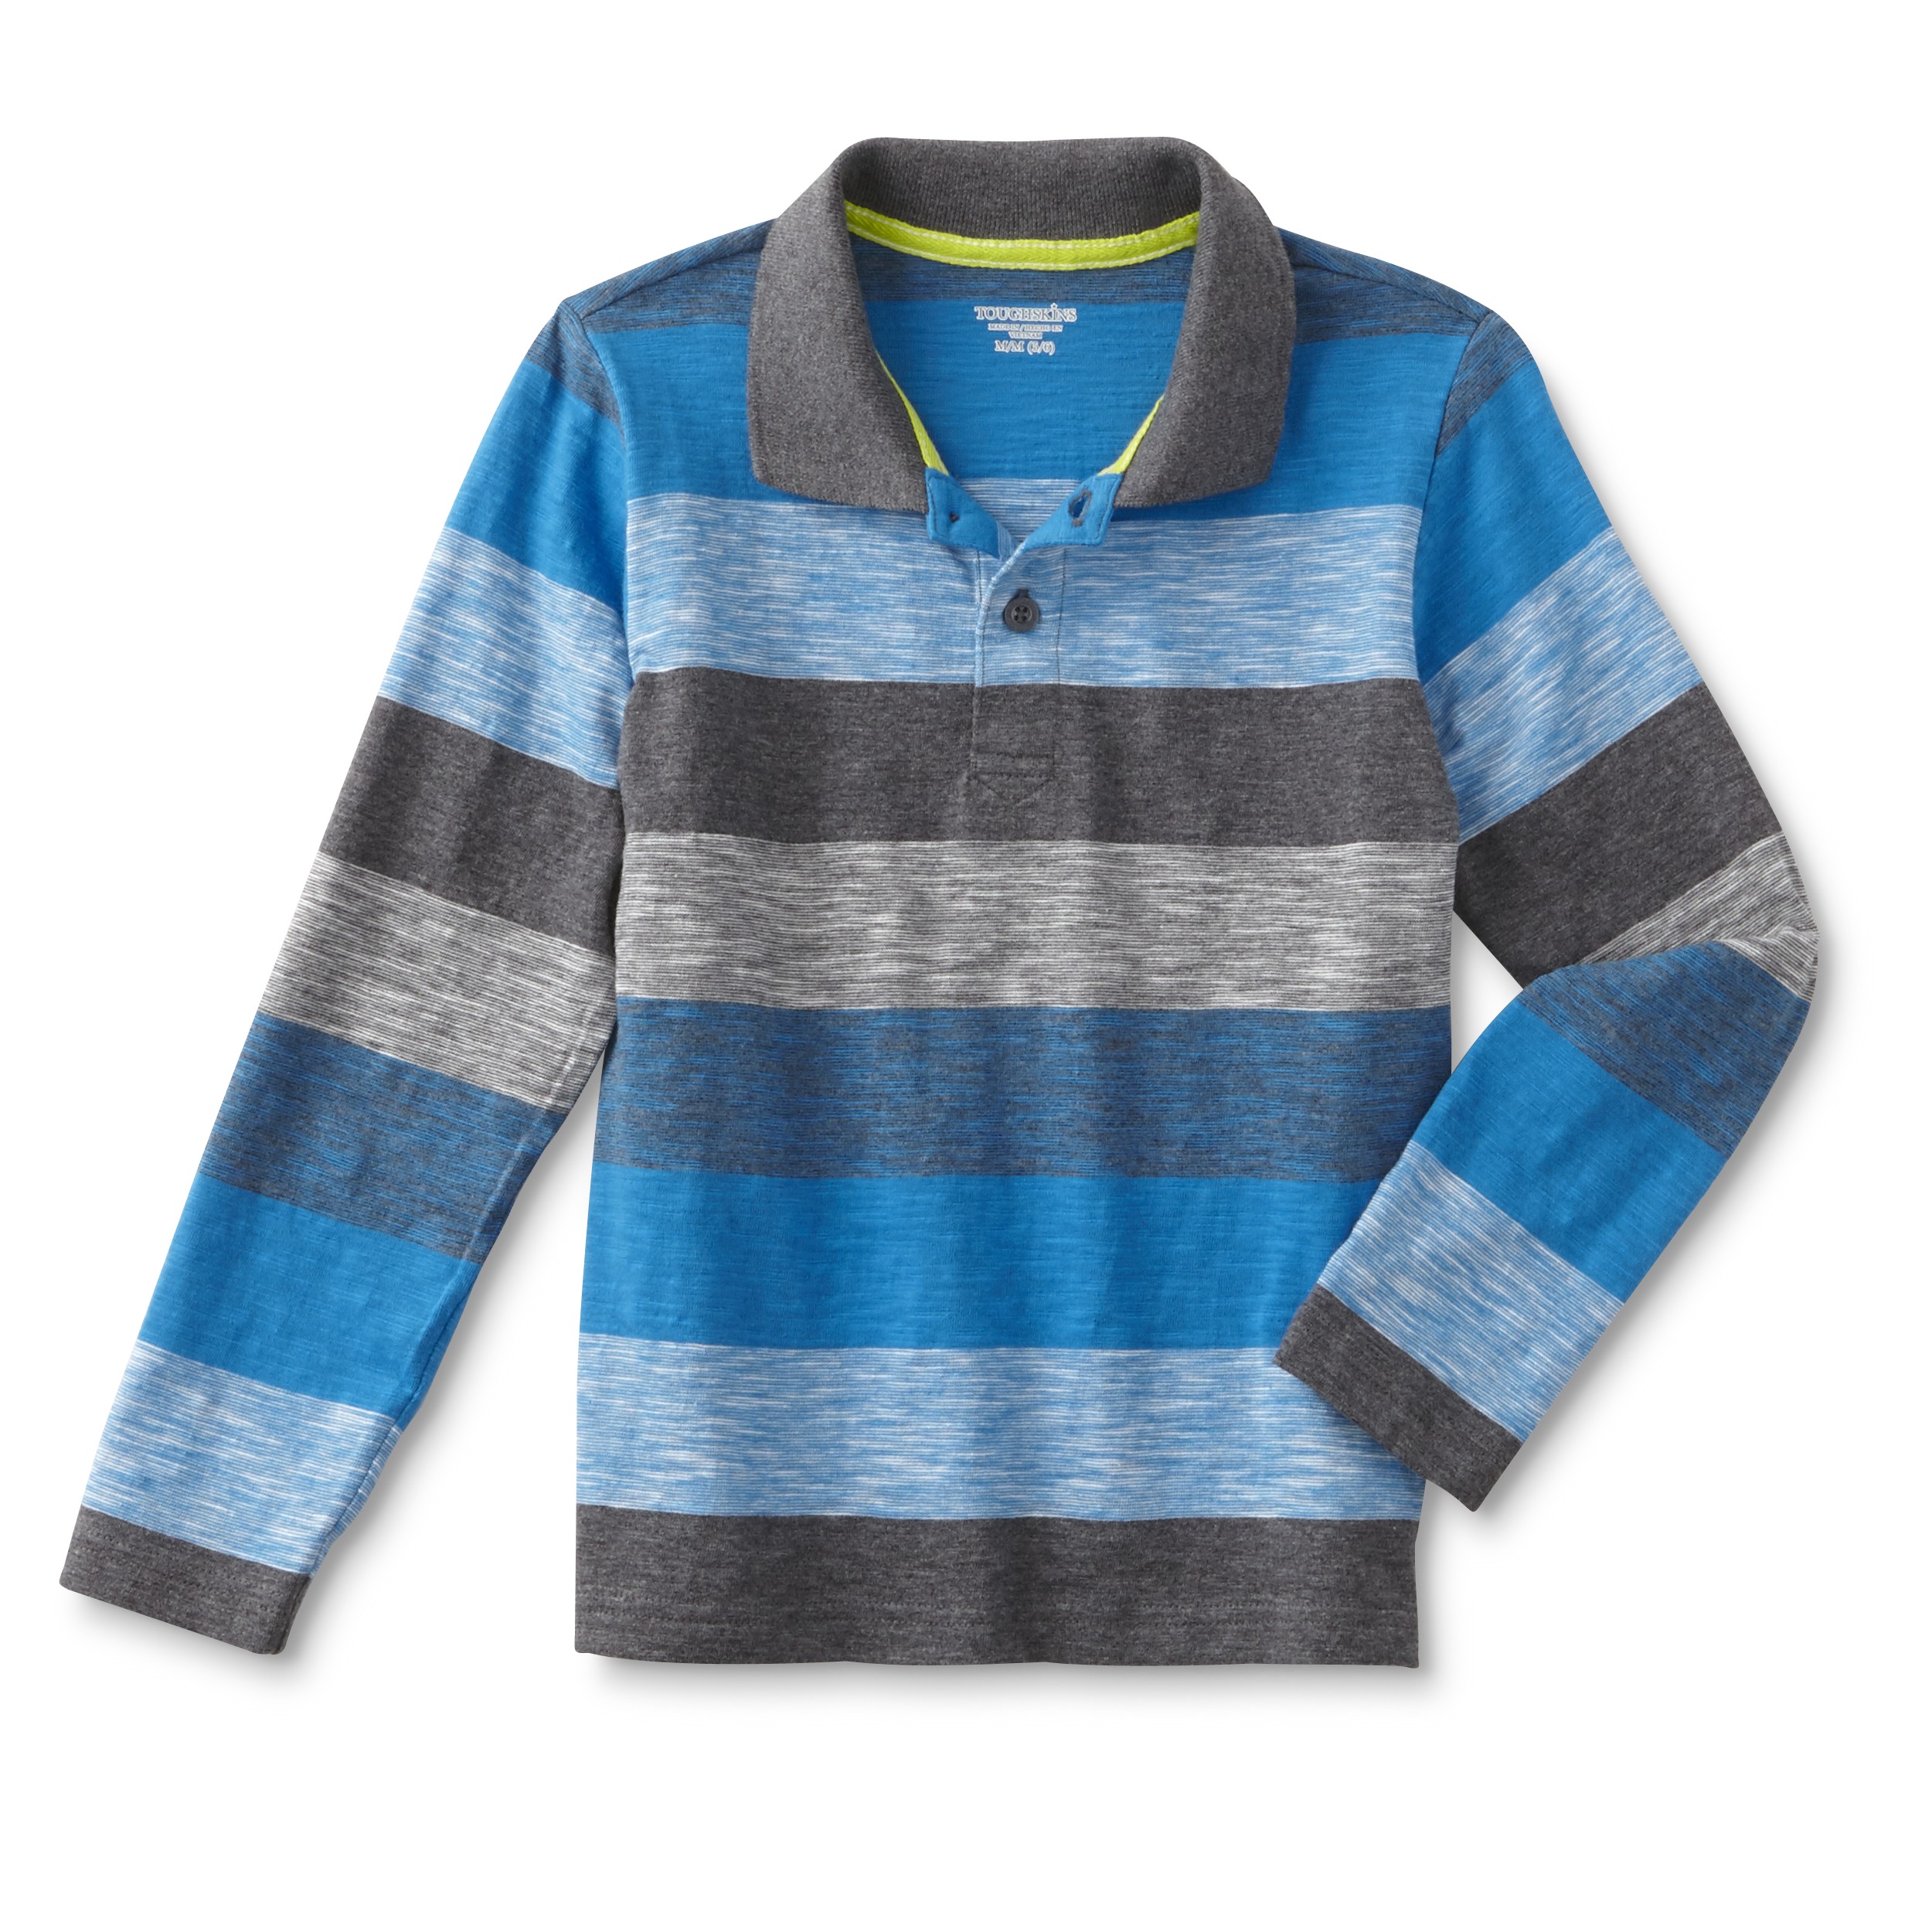 Toughskins Boy's Long-Sleeve Polo Shirt - Striped